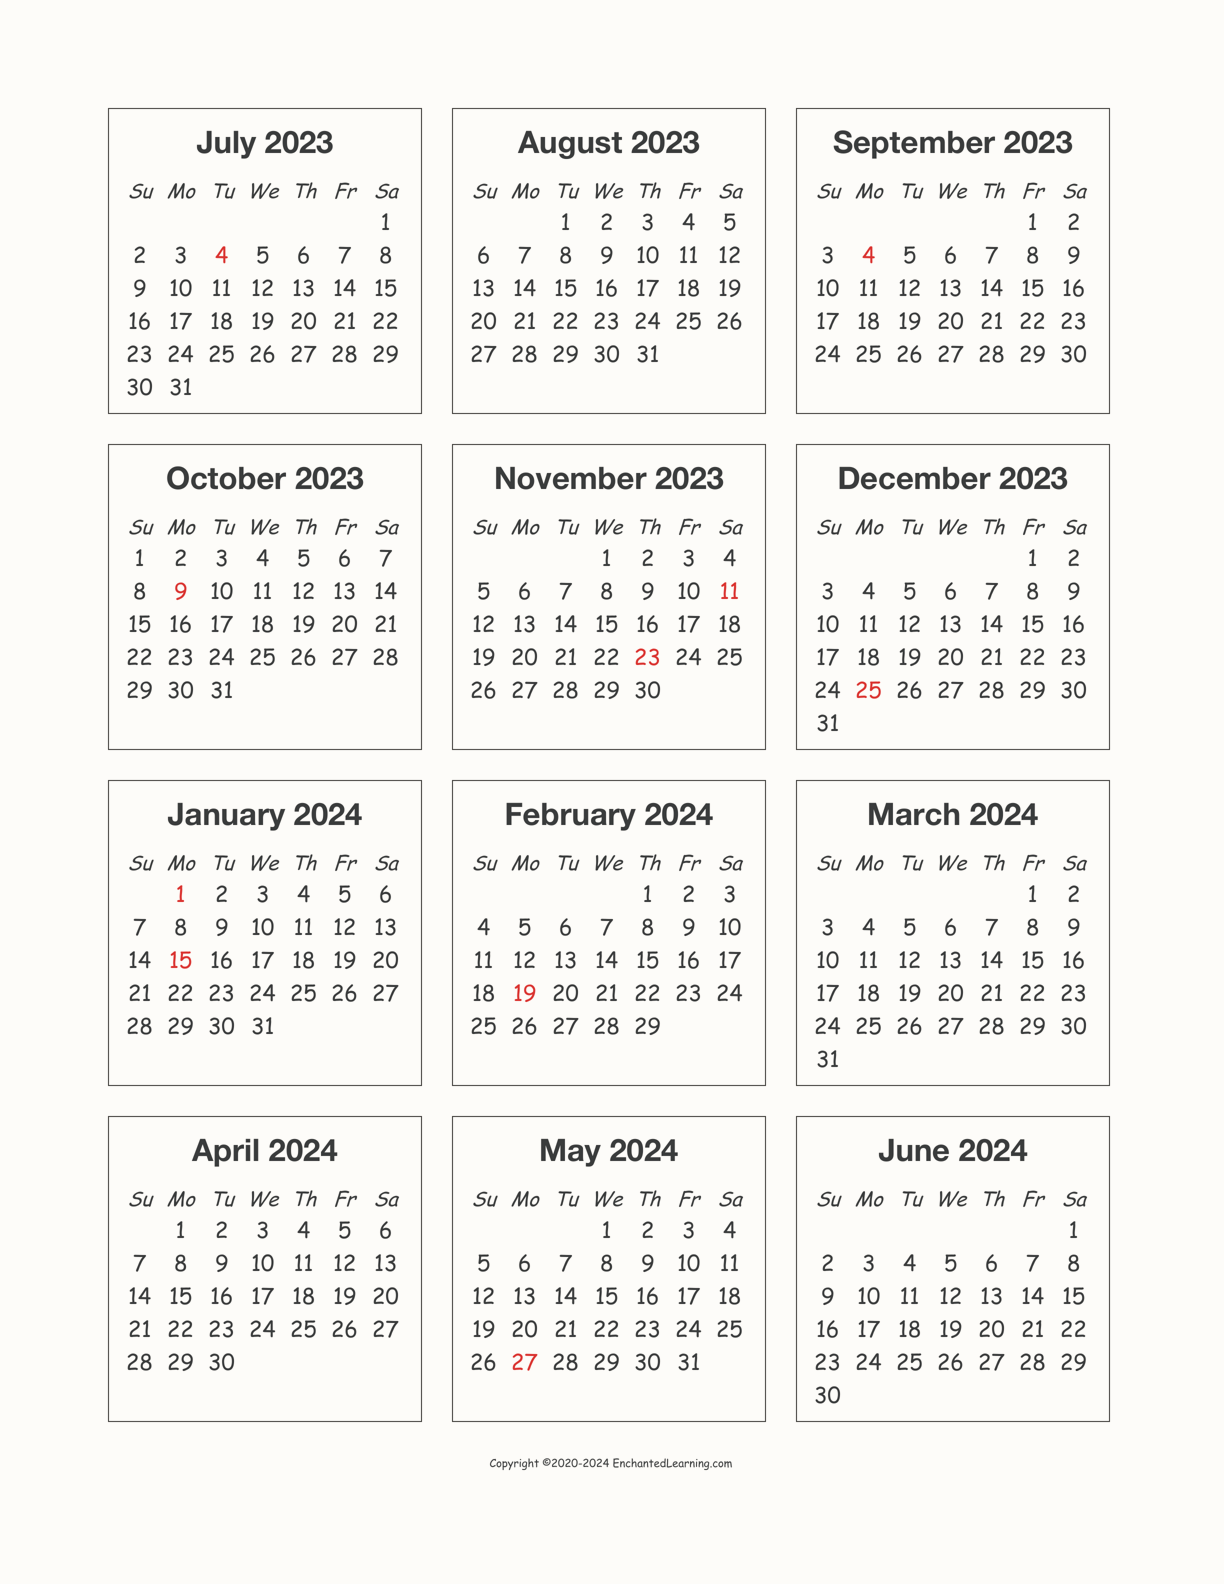 2023 Calendar 2024 2023 Calendar